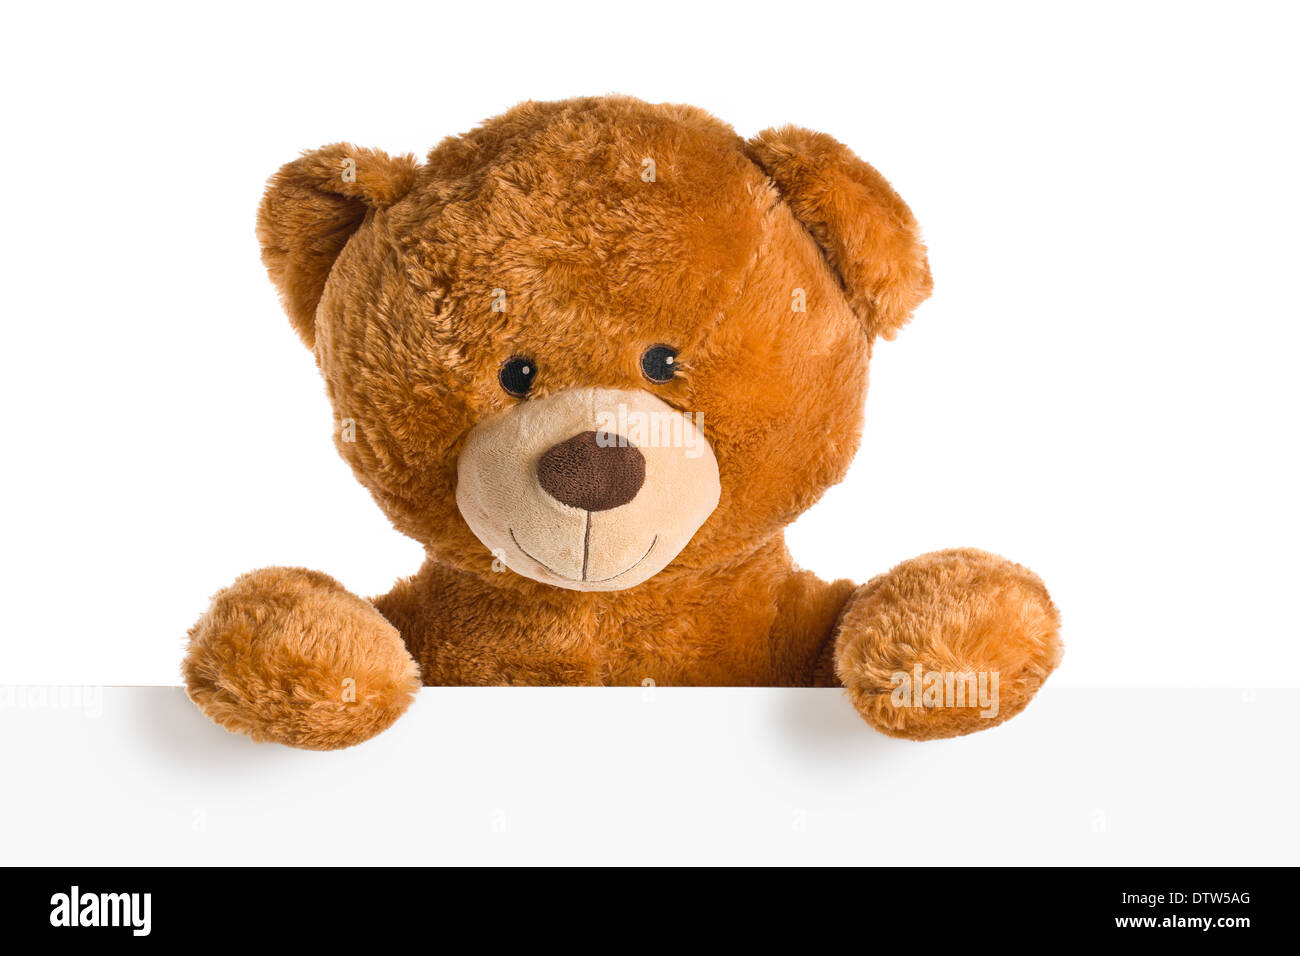 the teddy bear behind whiteboard Stock Photo